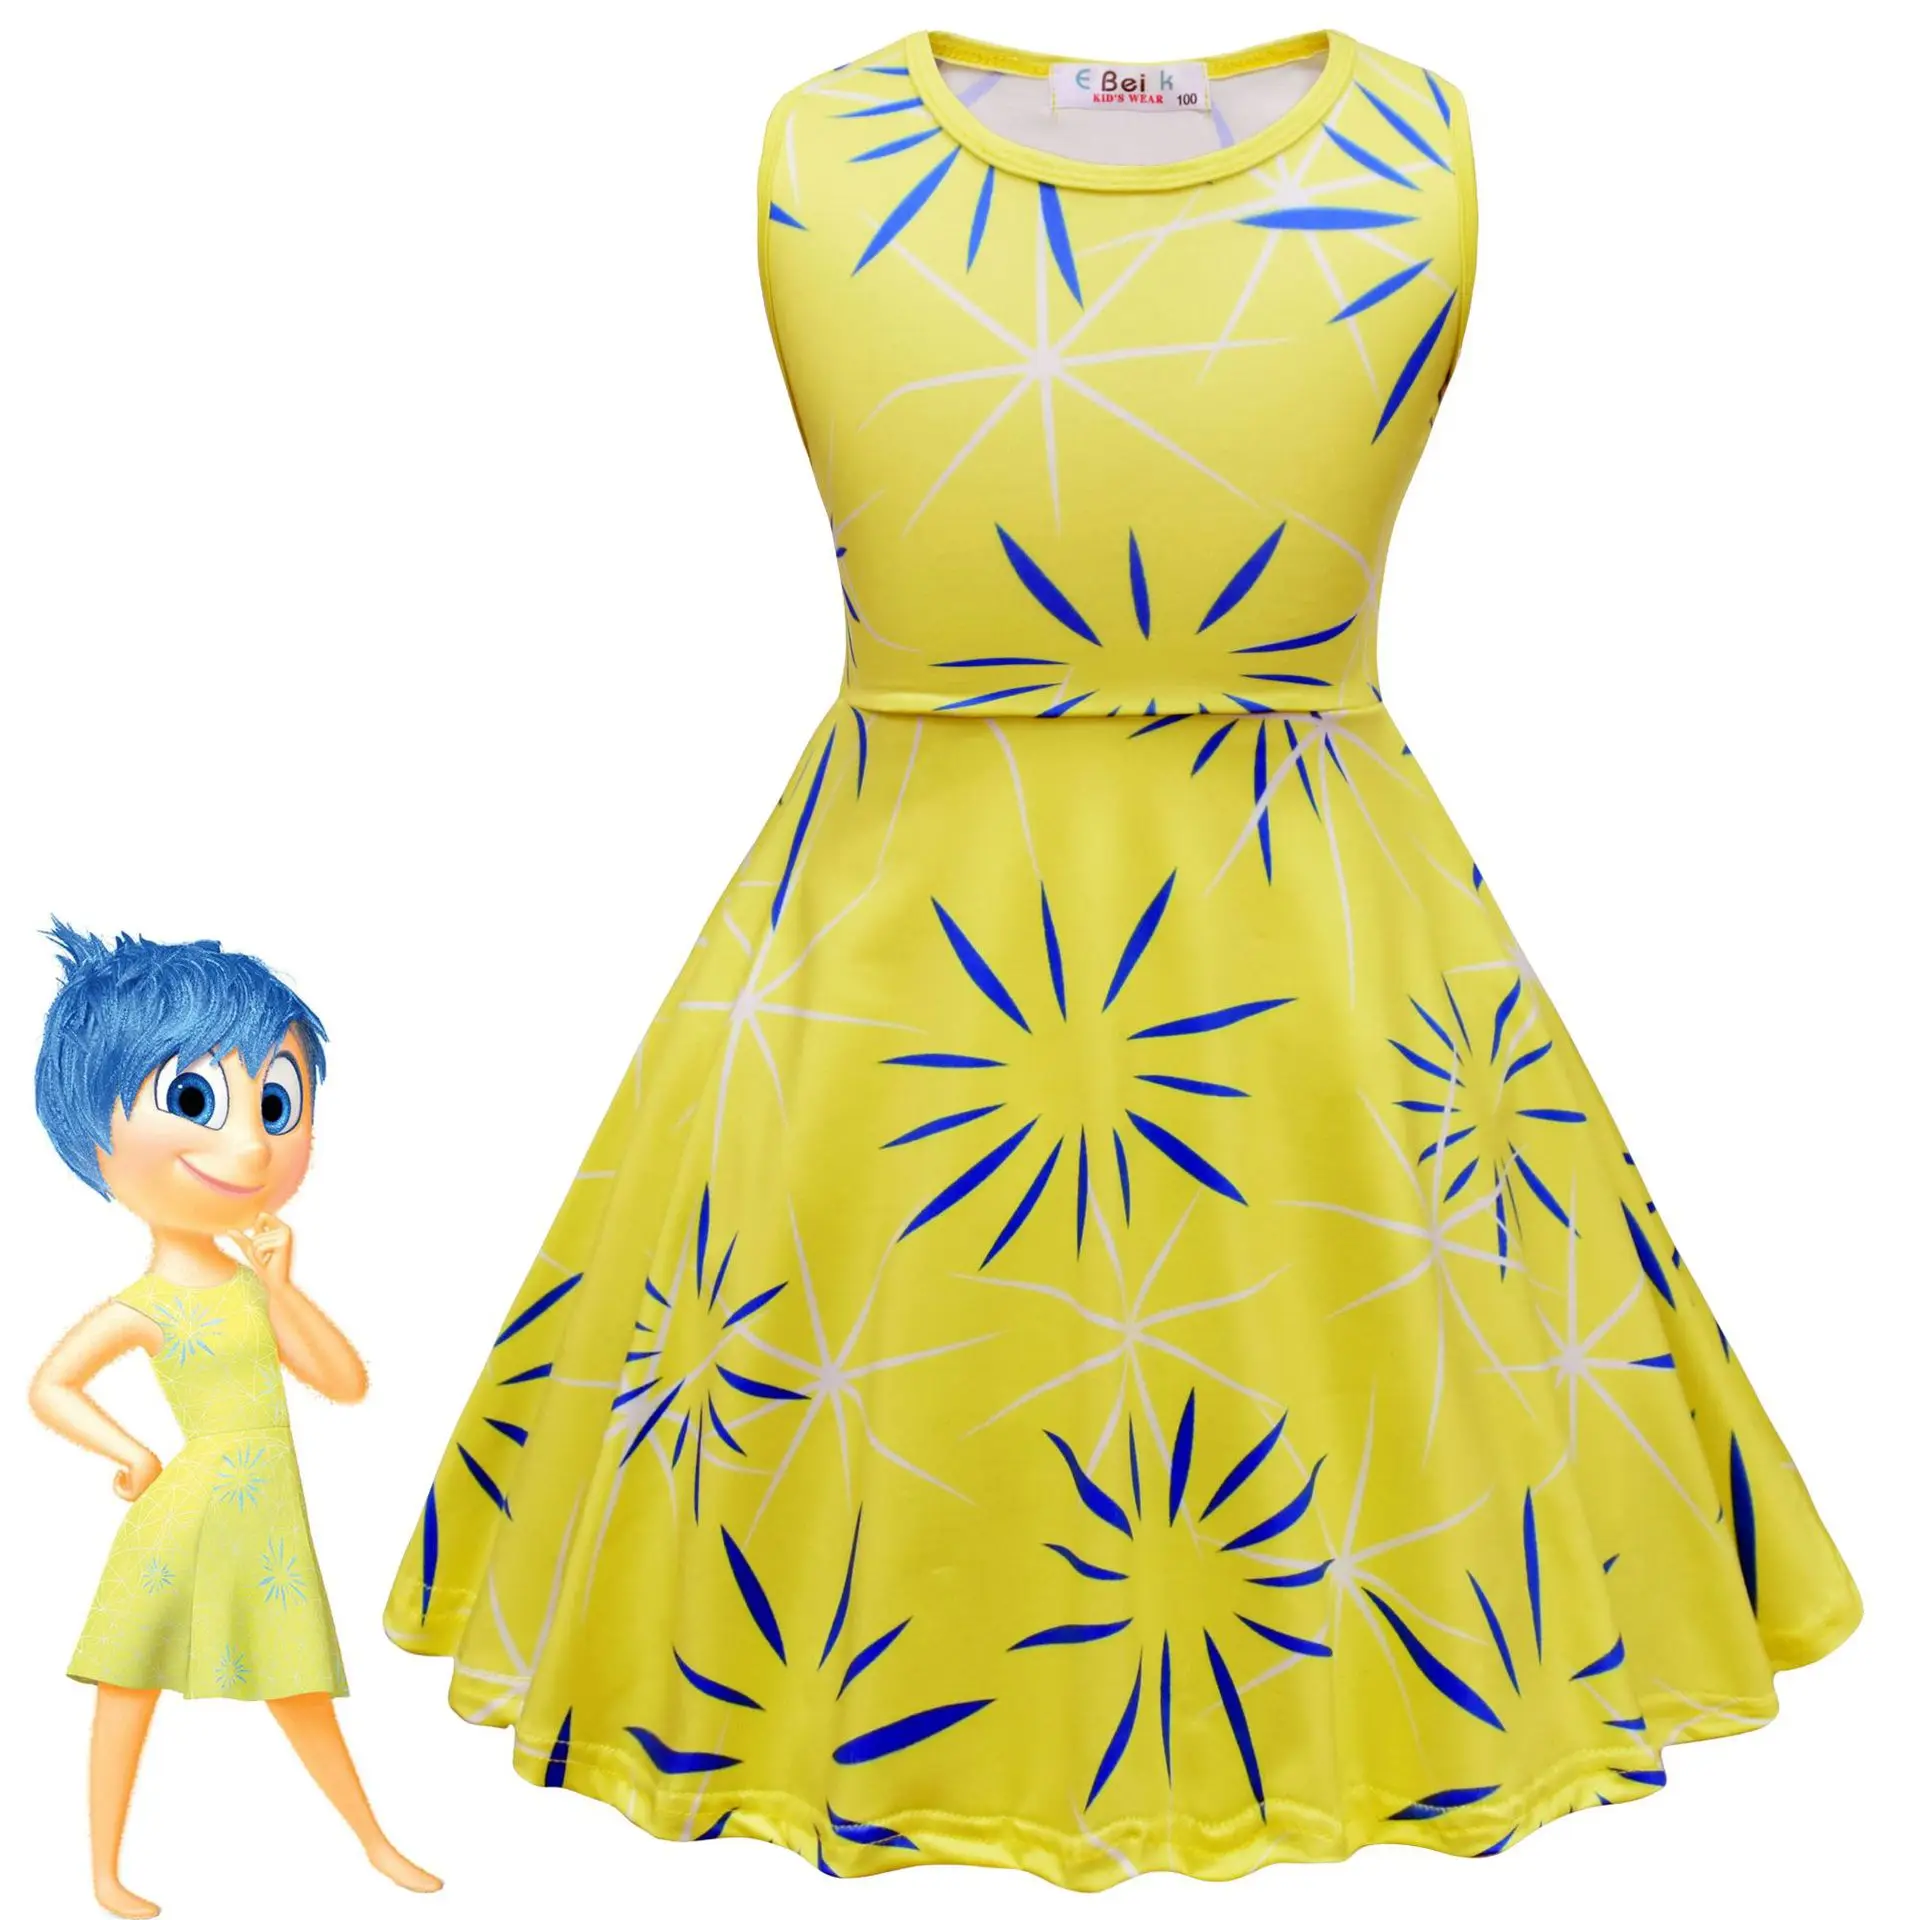 

Disney Inside Out Girls Dress Cartoon Kids Summer Skirt Sundress Flower Girl Dresses Cosplay Outfit Children's Clothing